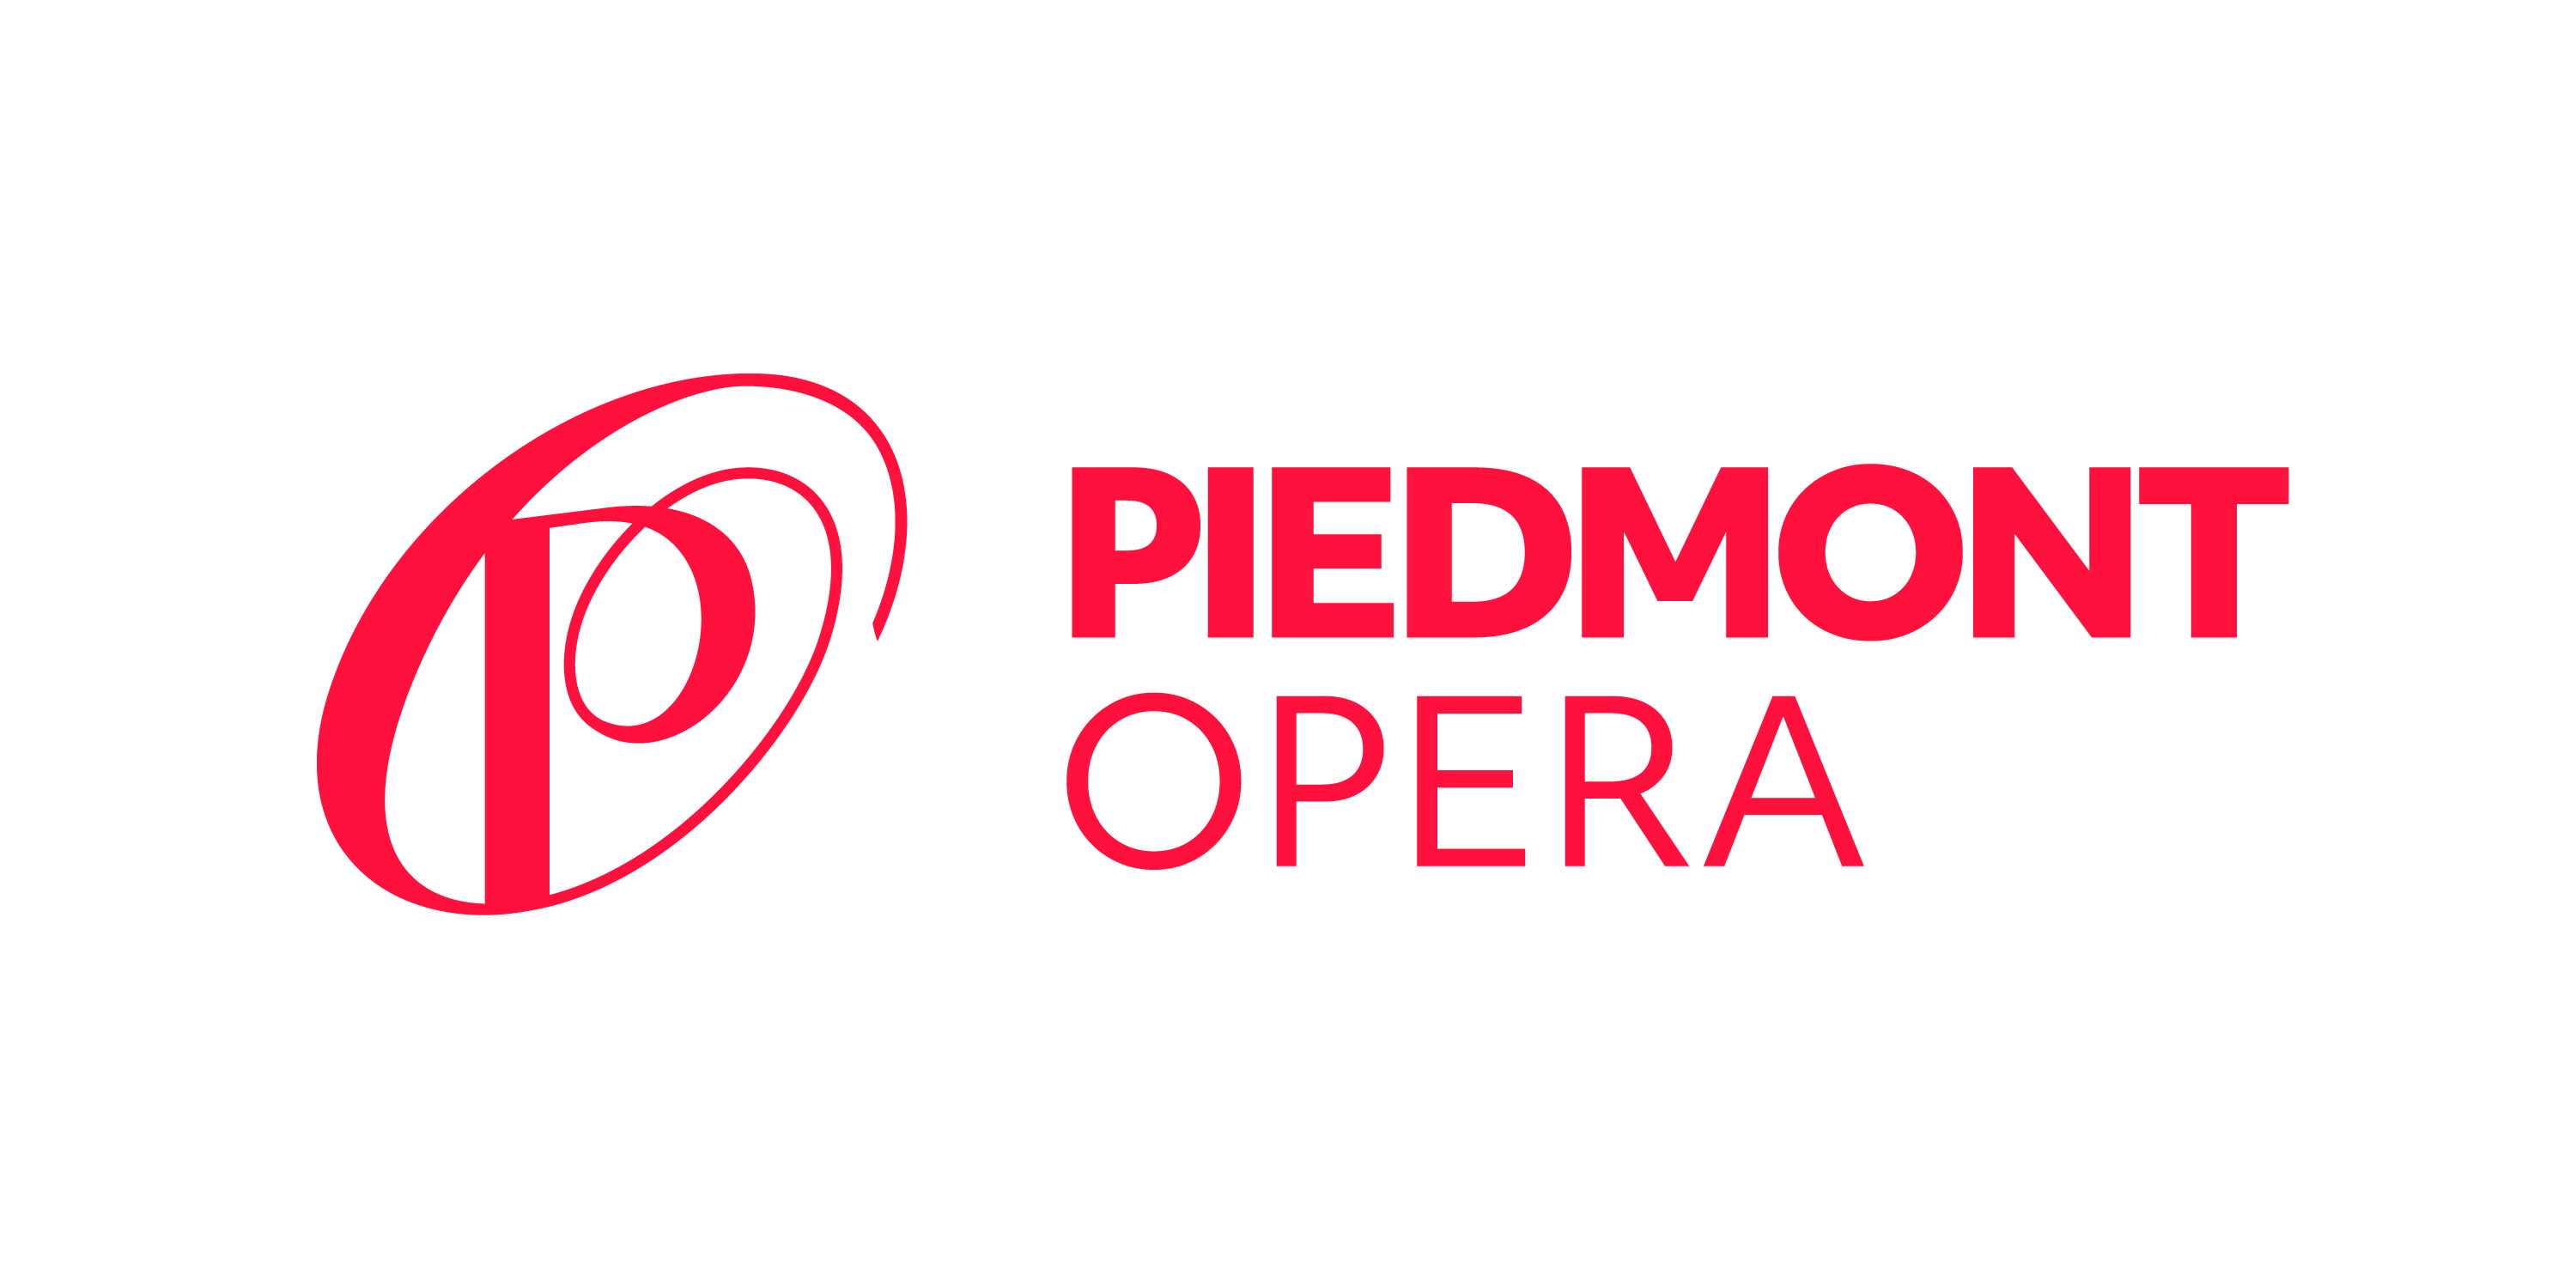 Piedmont Opera